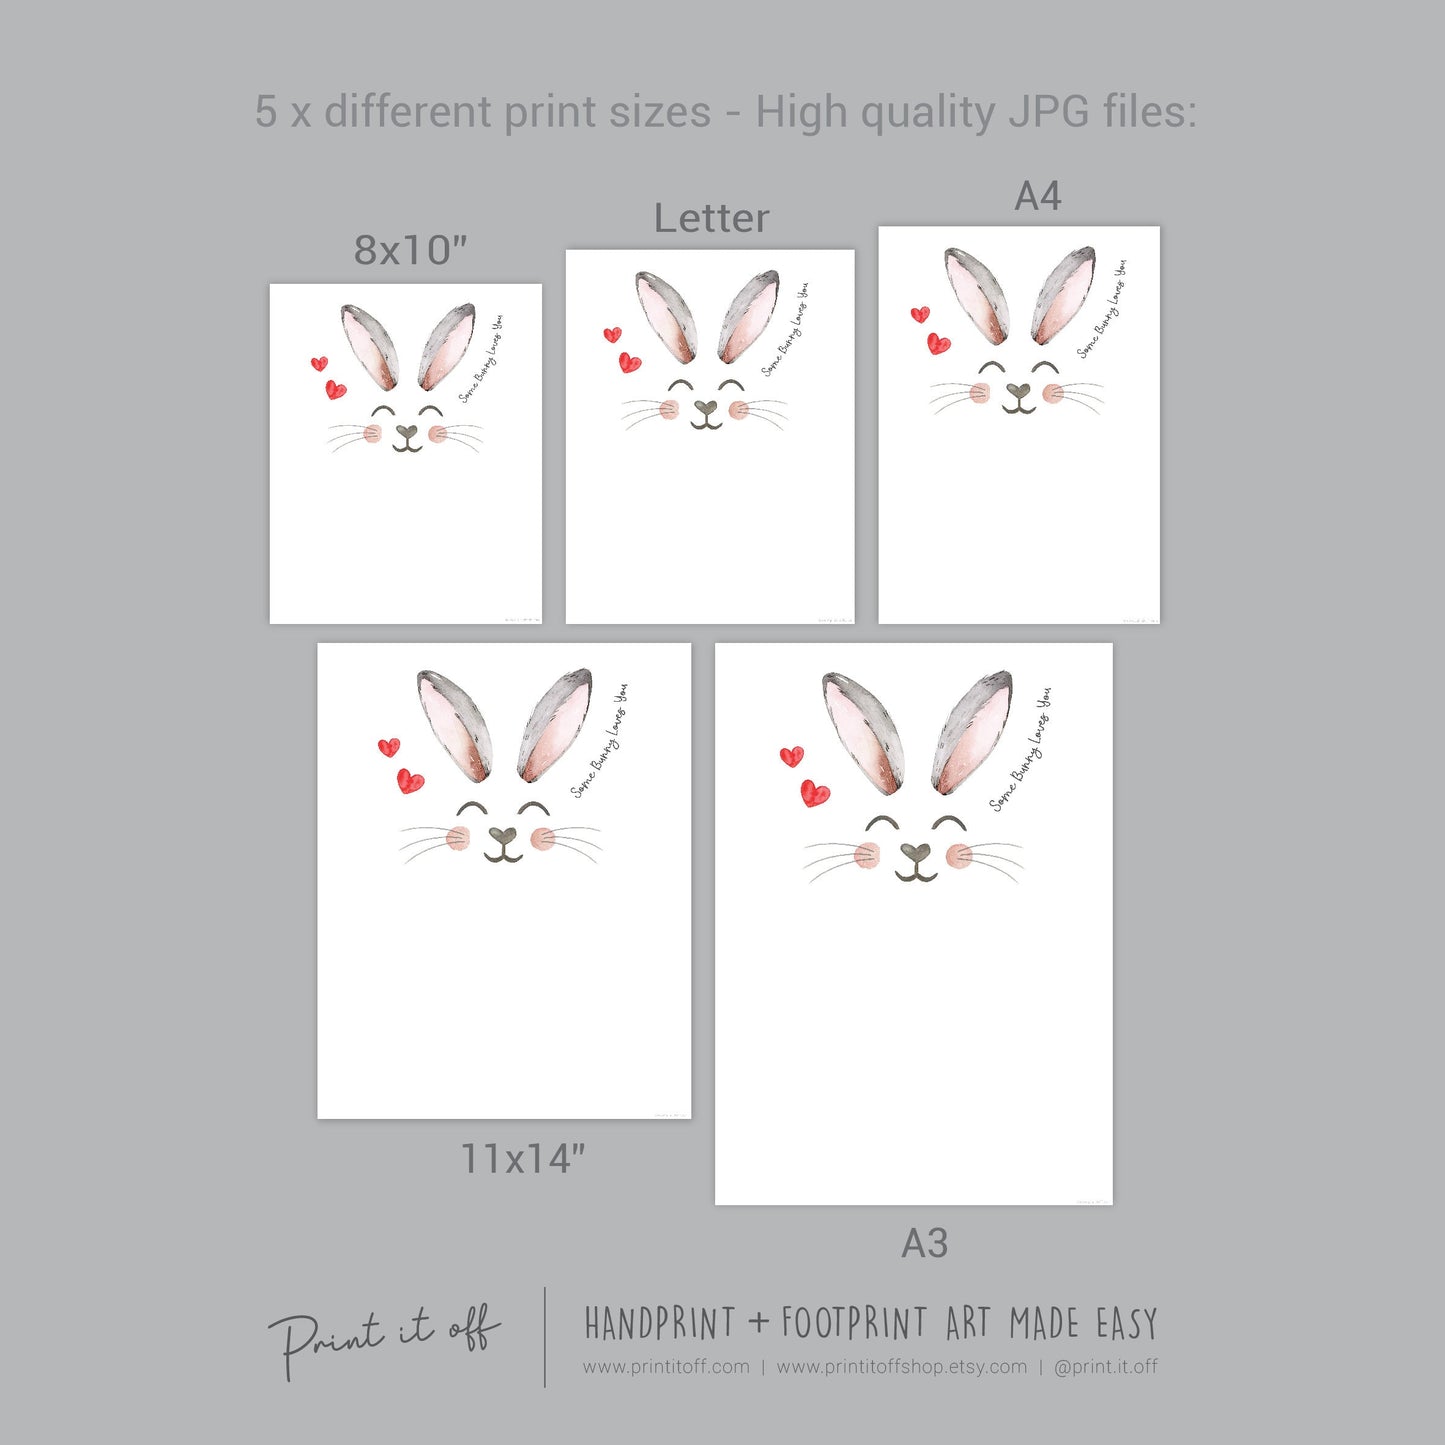 Some bunny Loves You / Easter / Footprint Handprint Art / Baby Toddler / Keepsake Memory Craft DIY Card / Print It Off